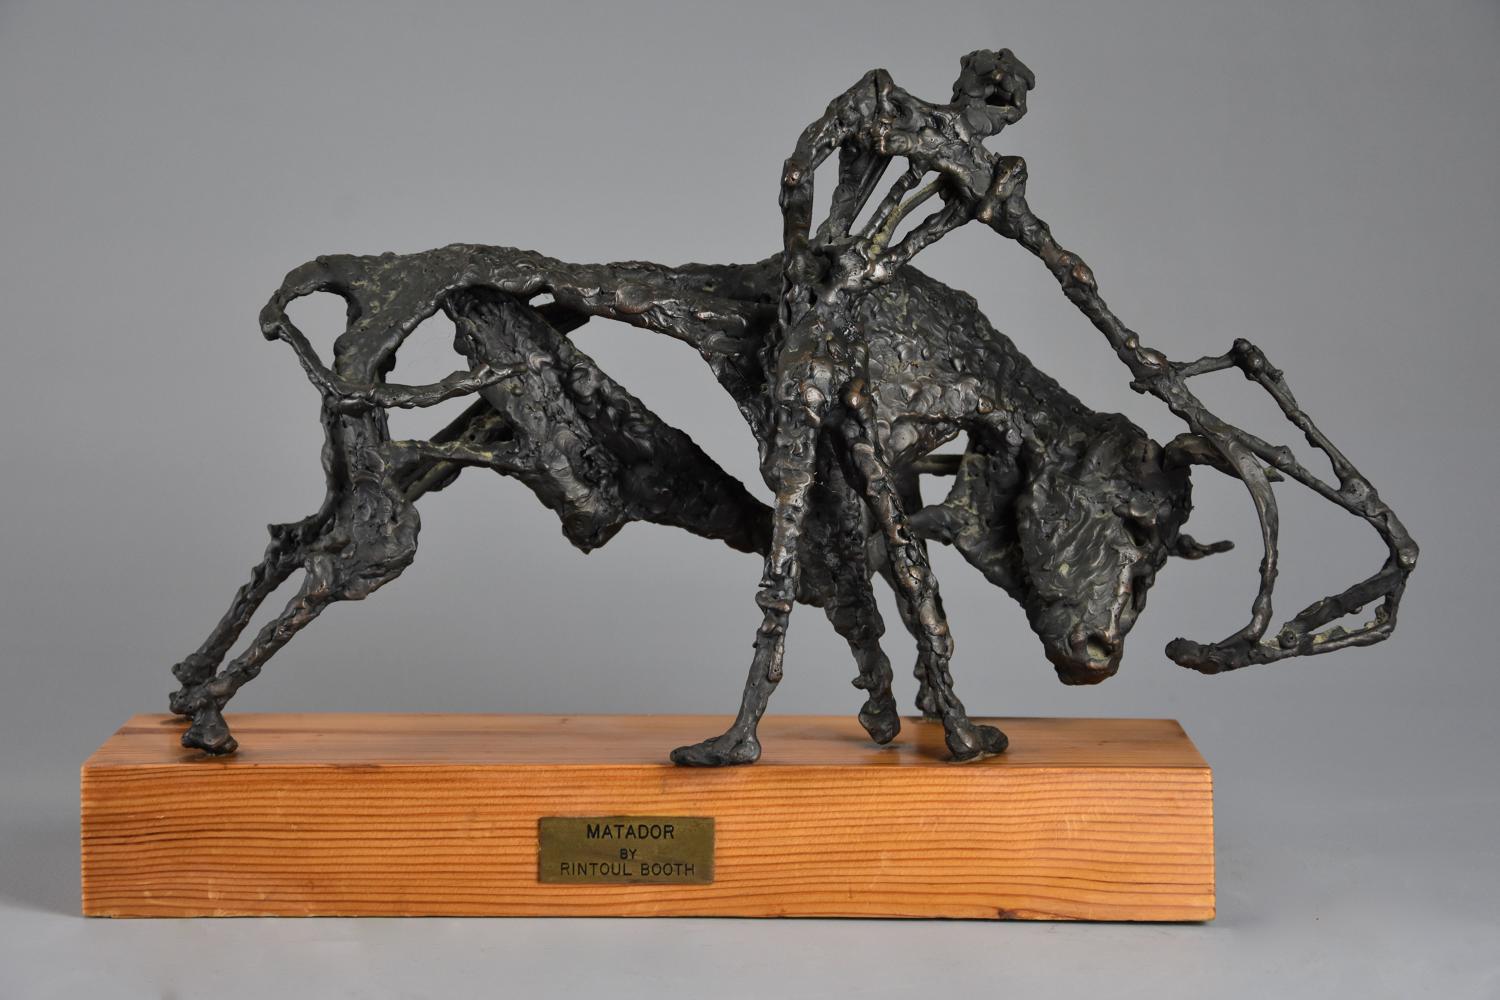 'The Matador' bronze sculpture by Rintoul Booth